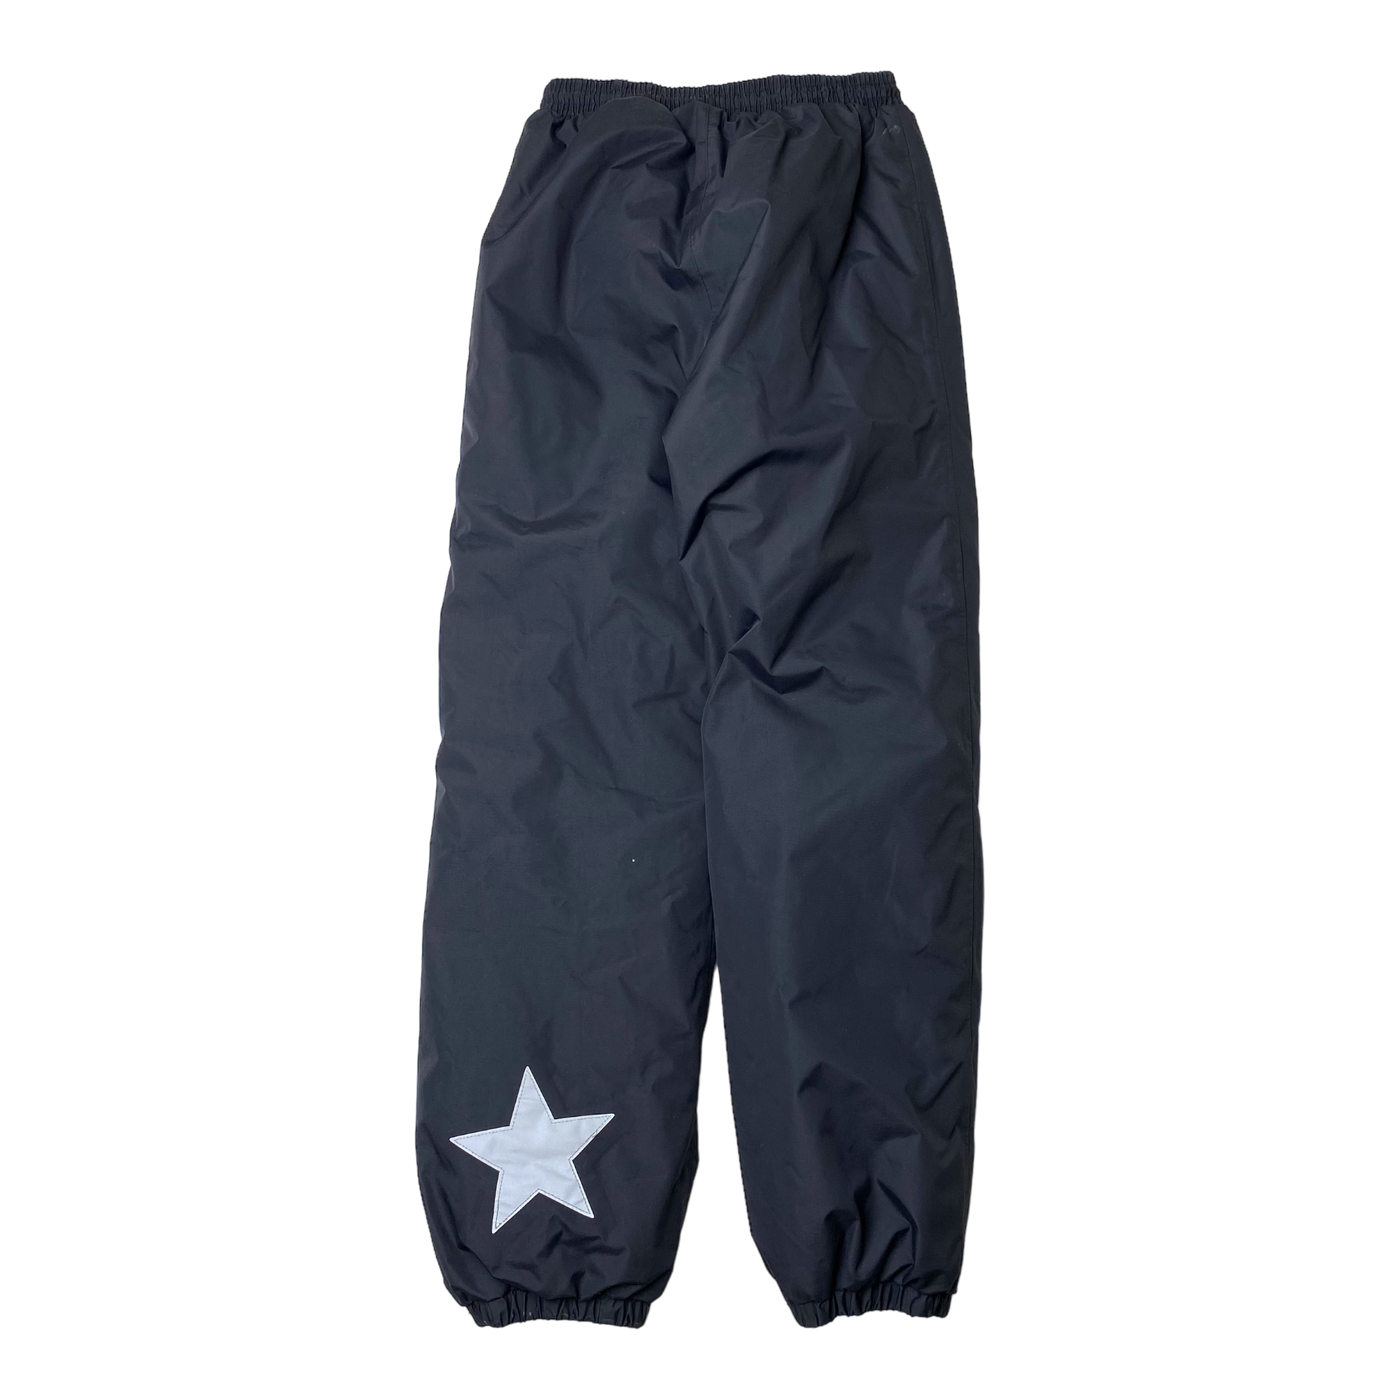 Molo heat basic winter pants, black | 152cm